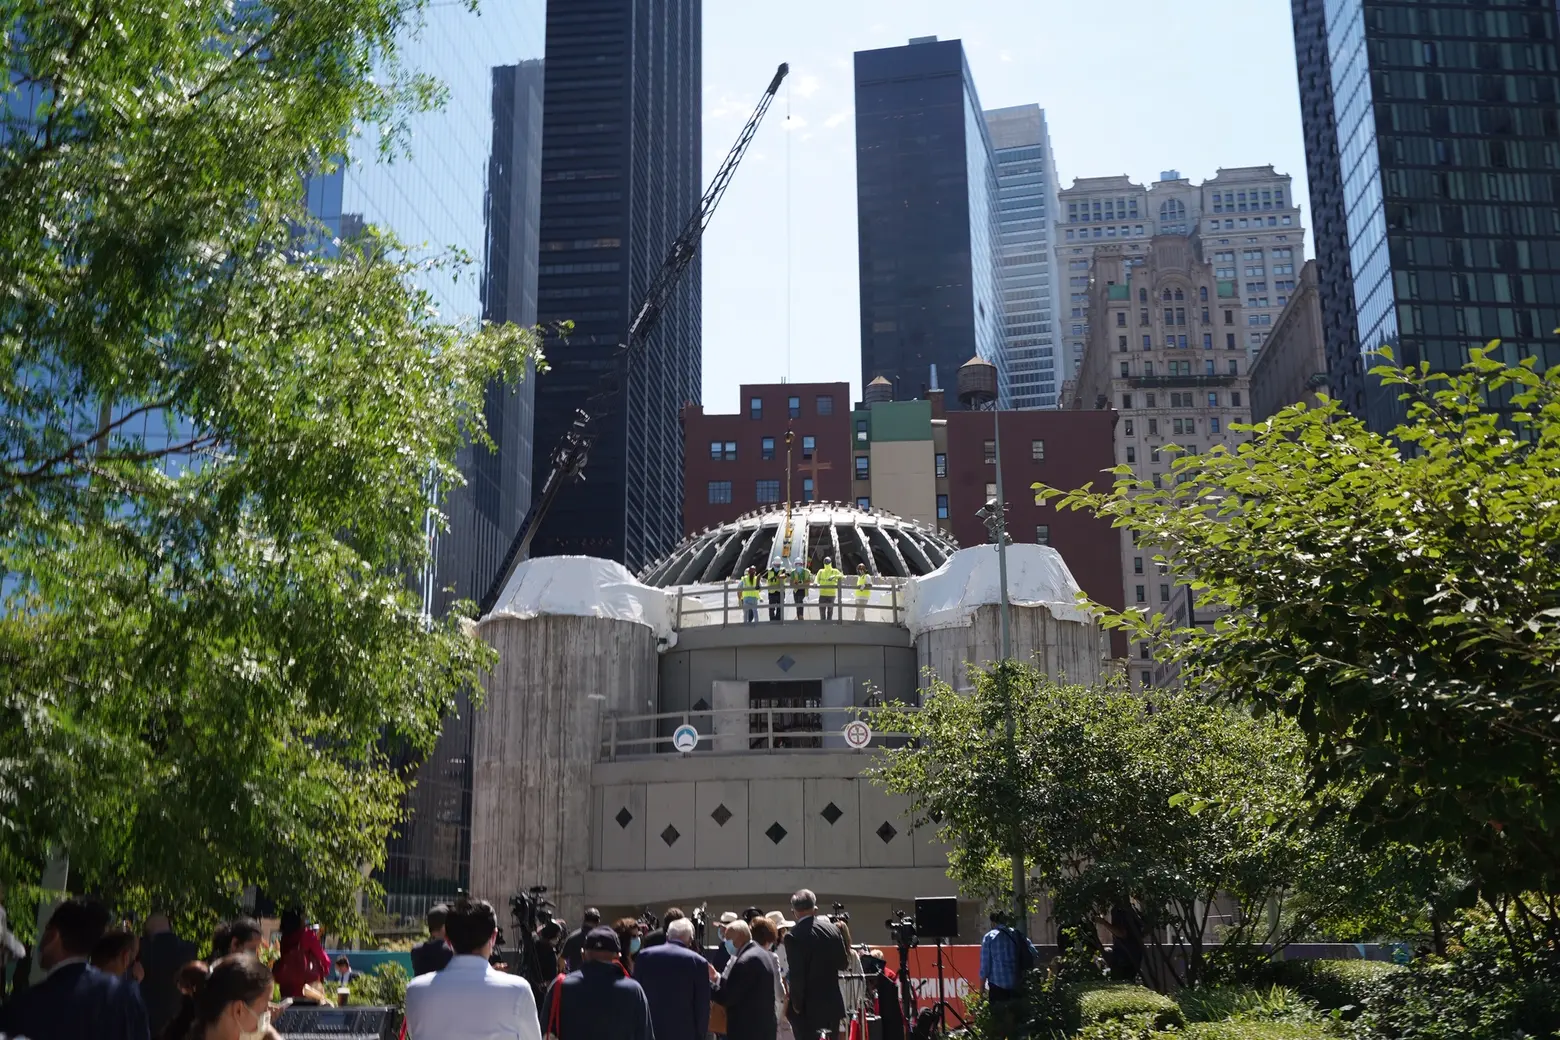 After original church was destroyed on 9/11, construction restarts at new St. Nicholas Shrine